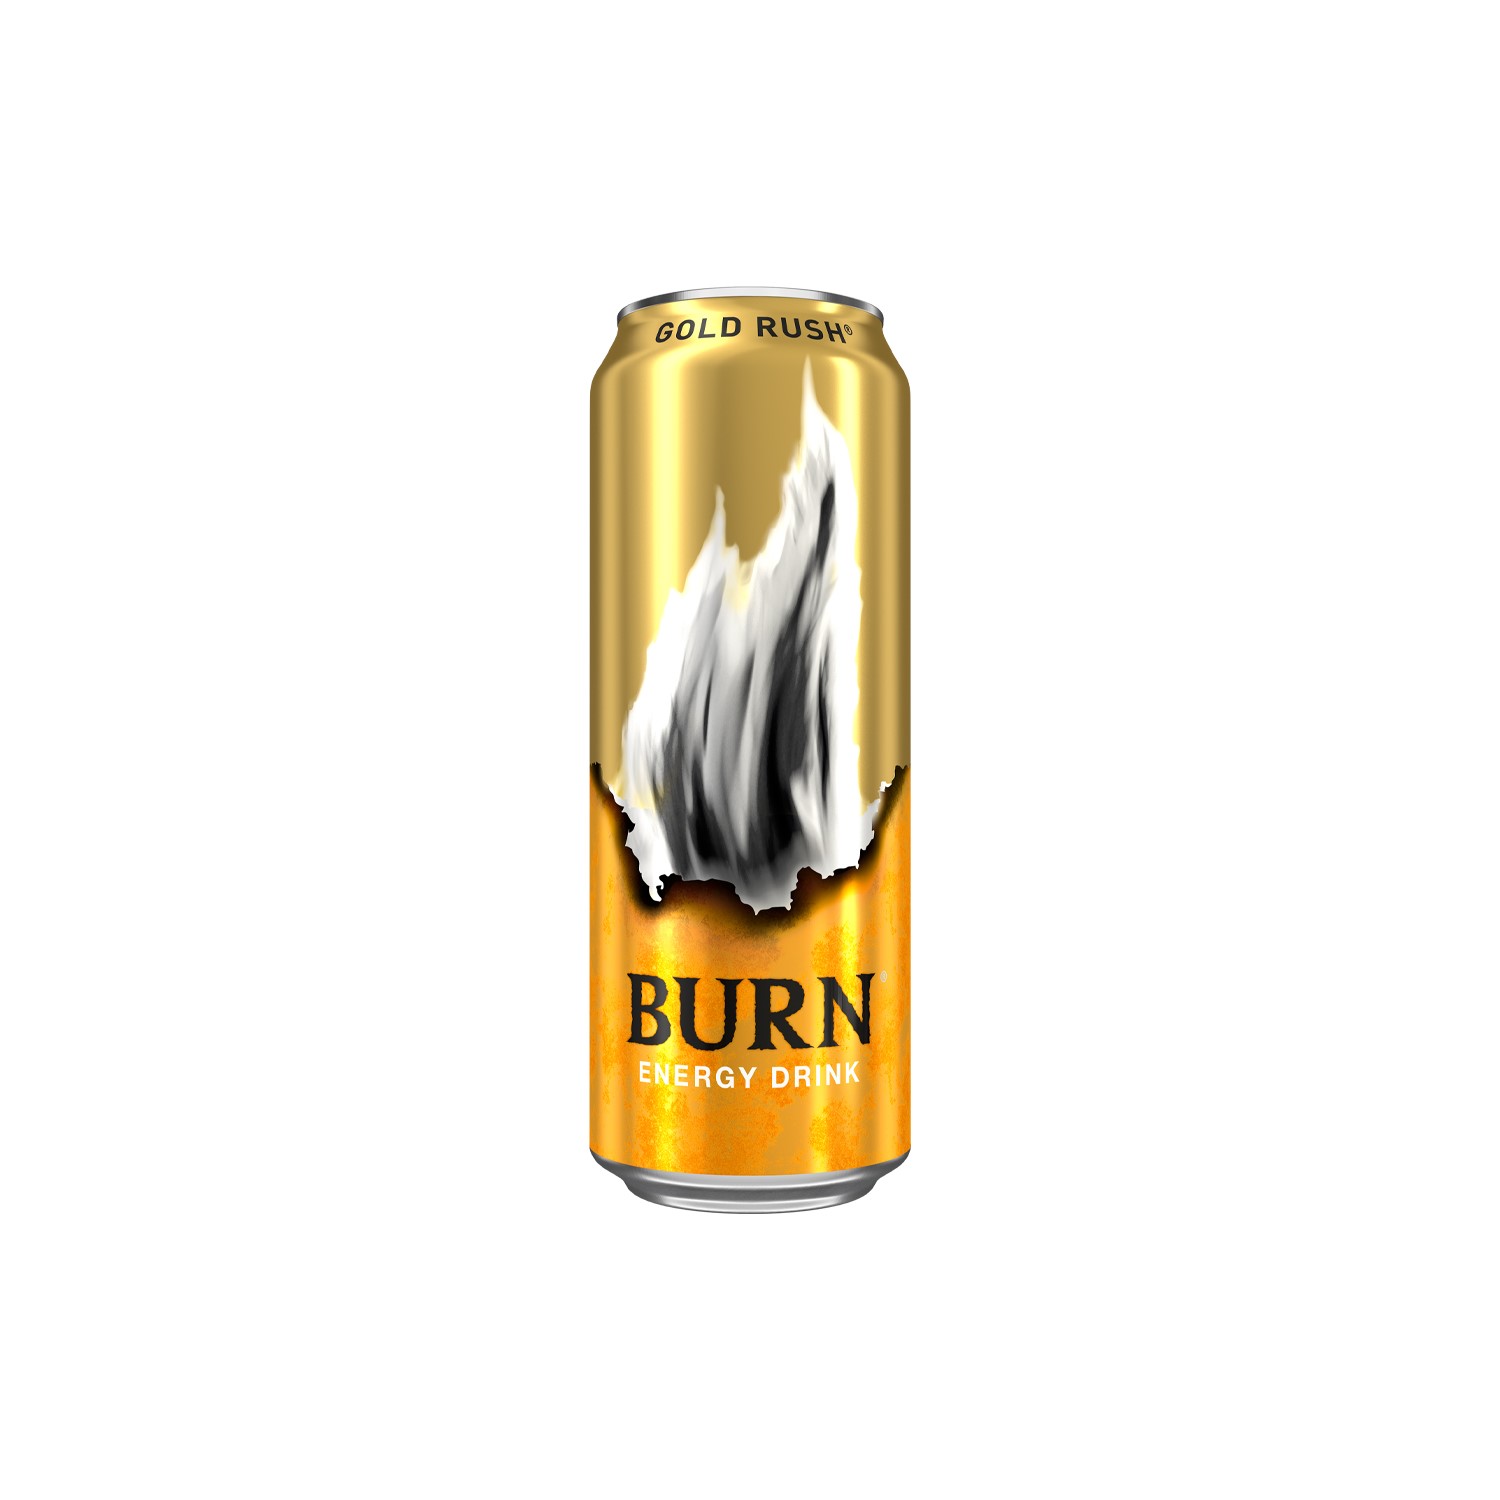 Берн голд раша. Burn Gold Spark. Burn (энергетический напиток). Новый Энергетик Burn Gold Rush. Burn Energy Drink Спонсор.